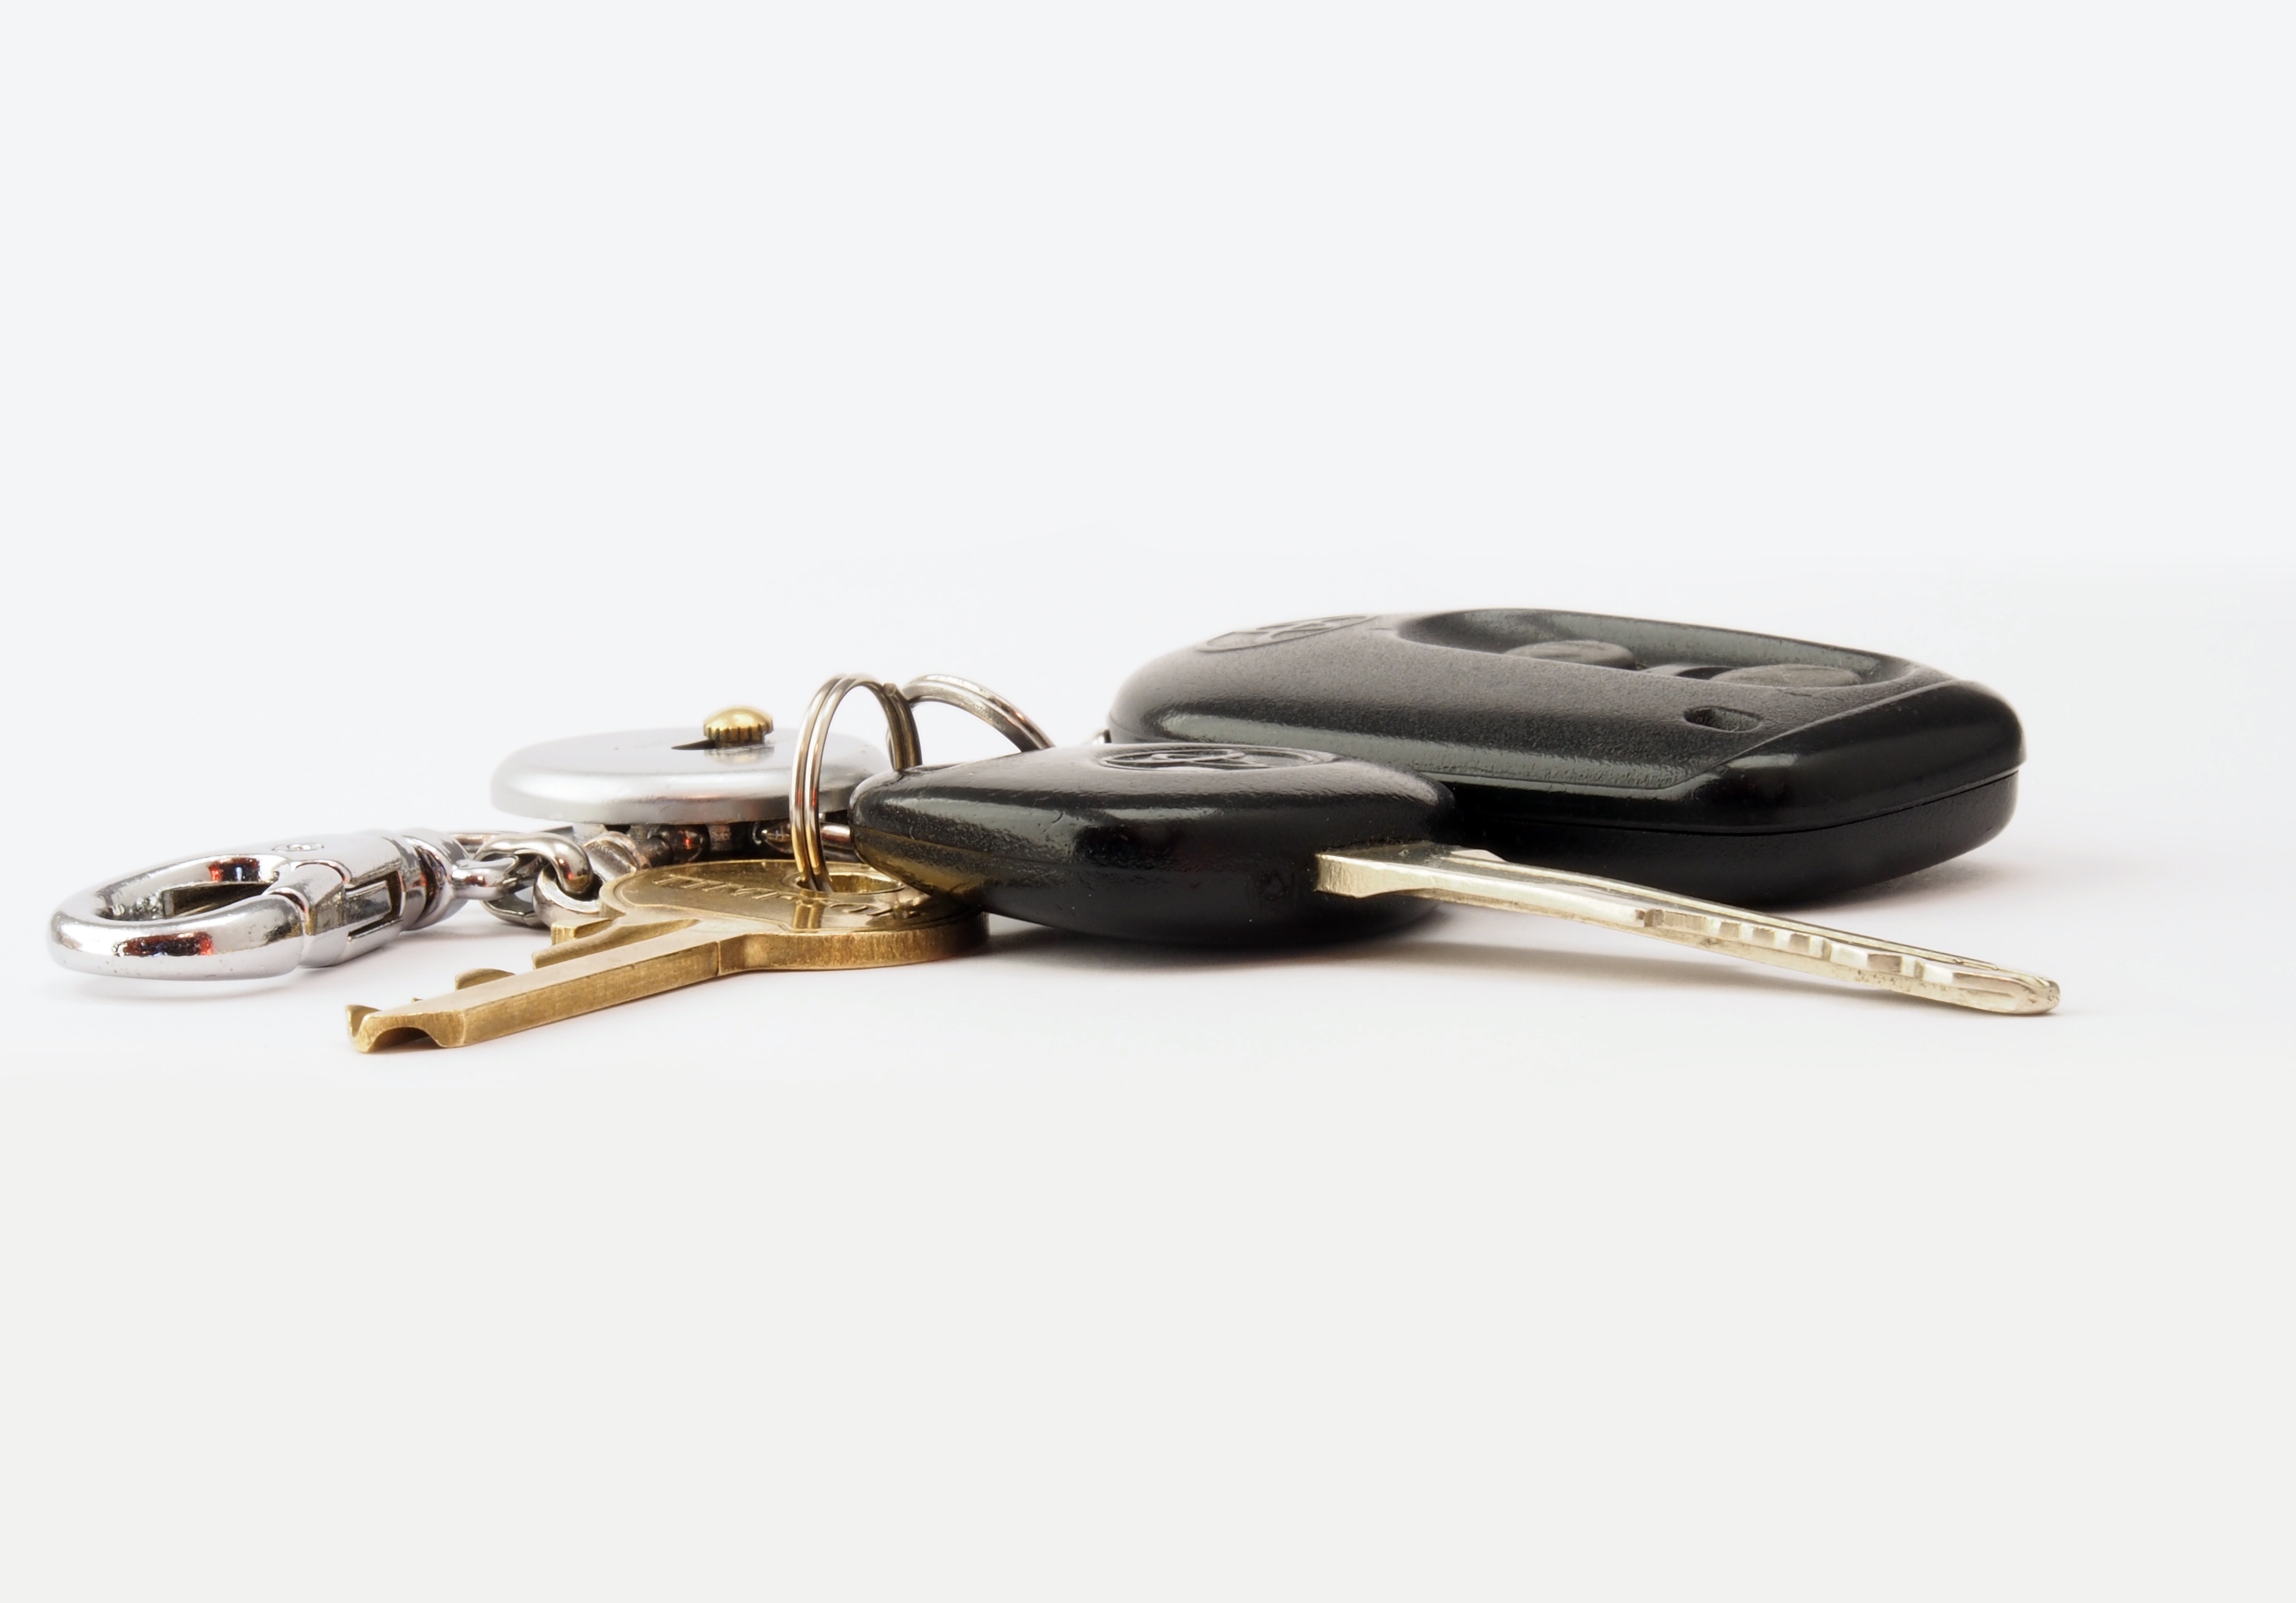 Get a new set of car keys with an HSBC Online Car Loan